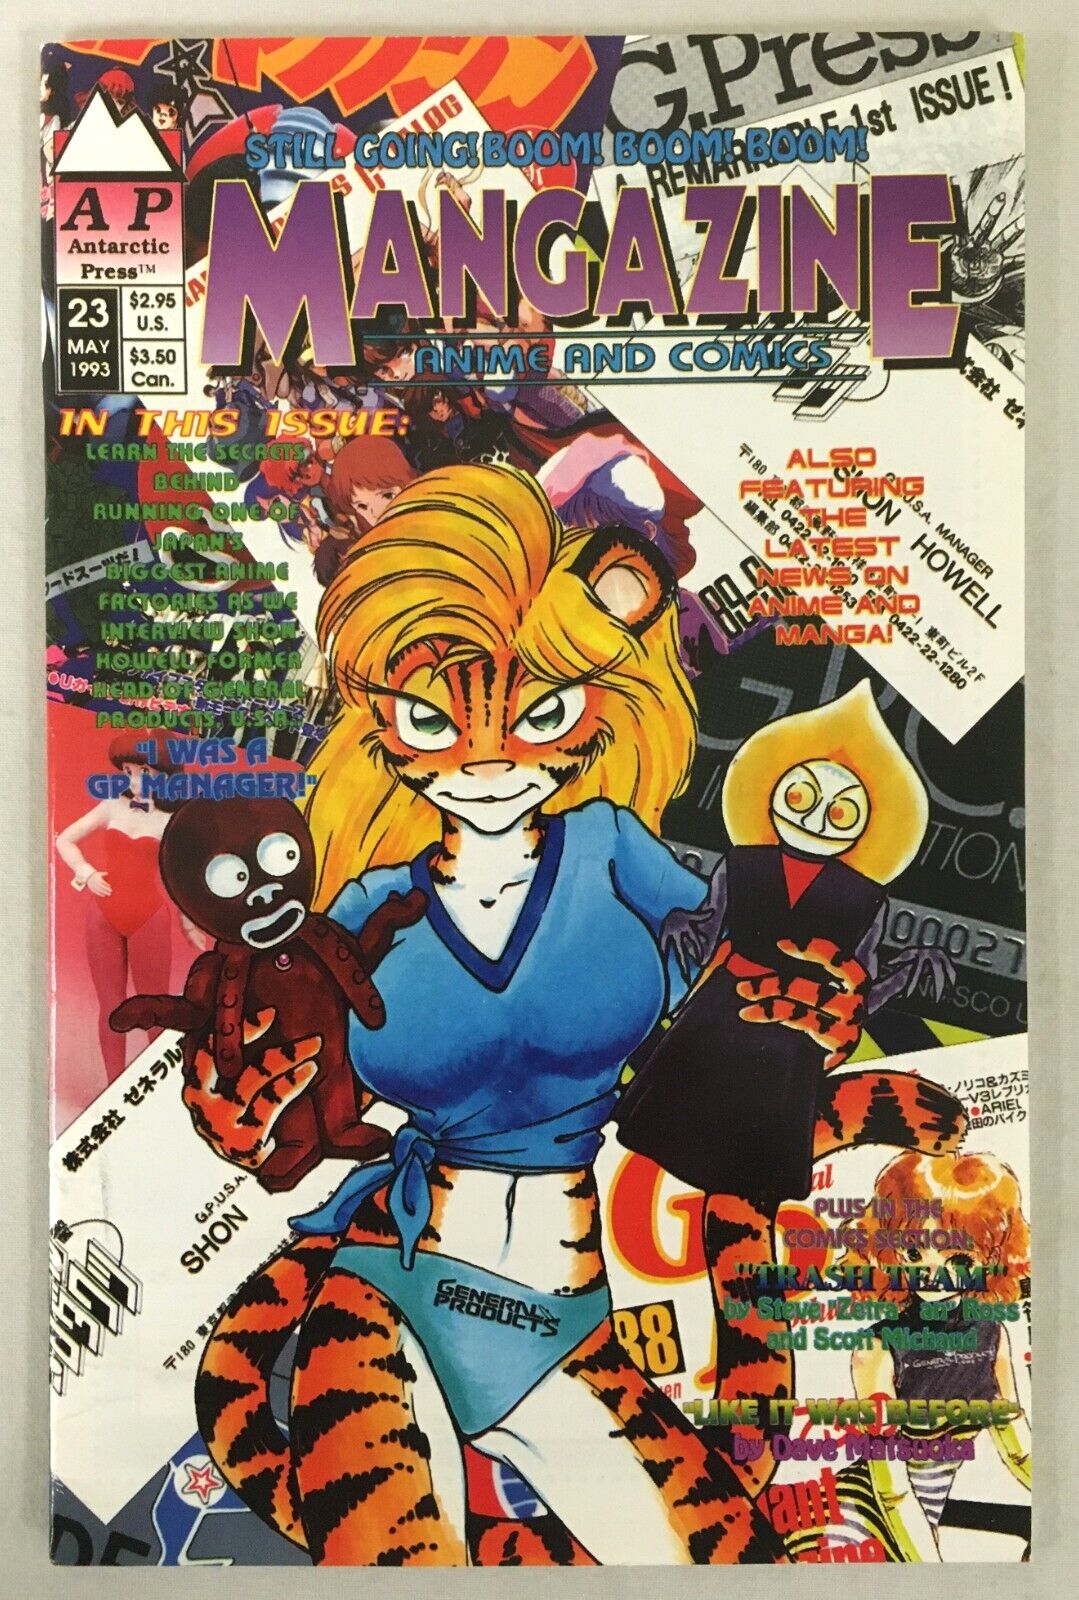 Mangazine #23 Volume 2 Antarctic Press Comics May 1993 (FN/VF 7.0 Grade)